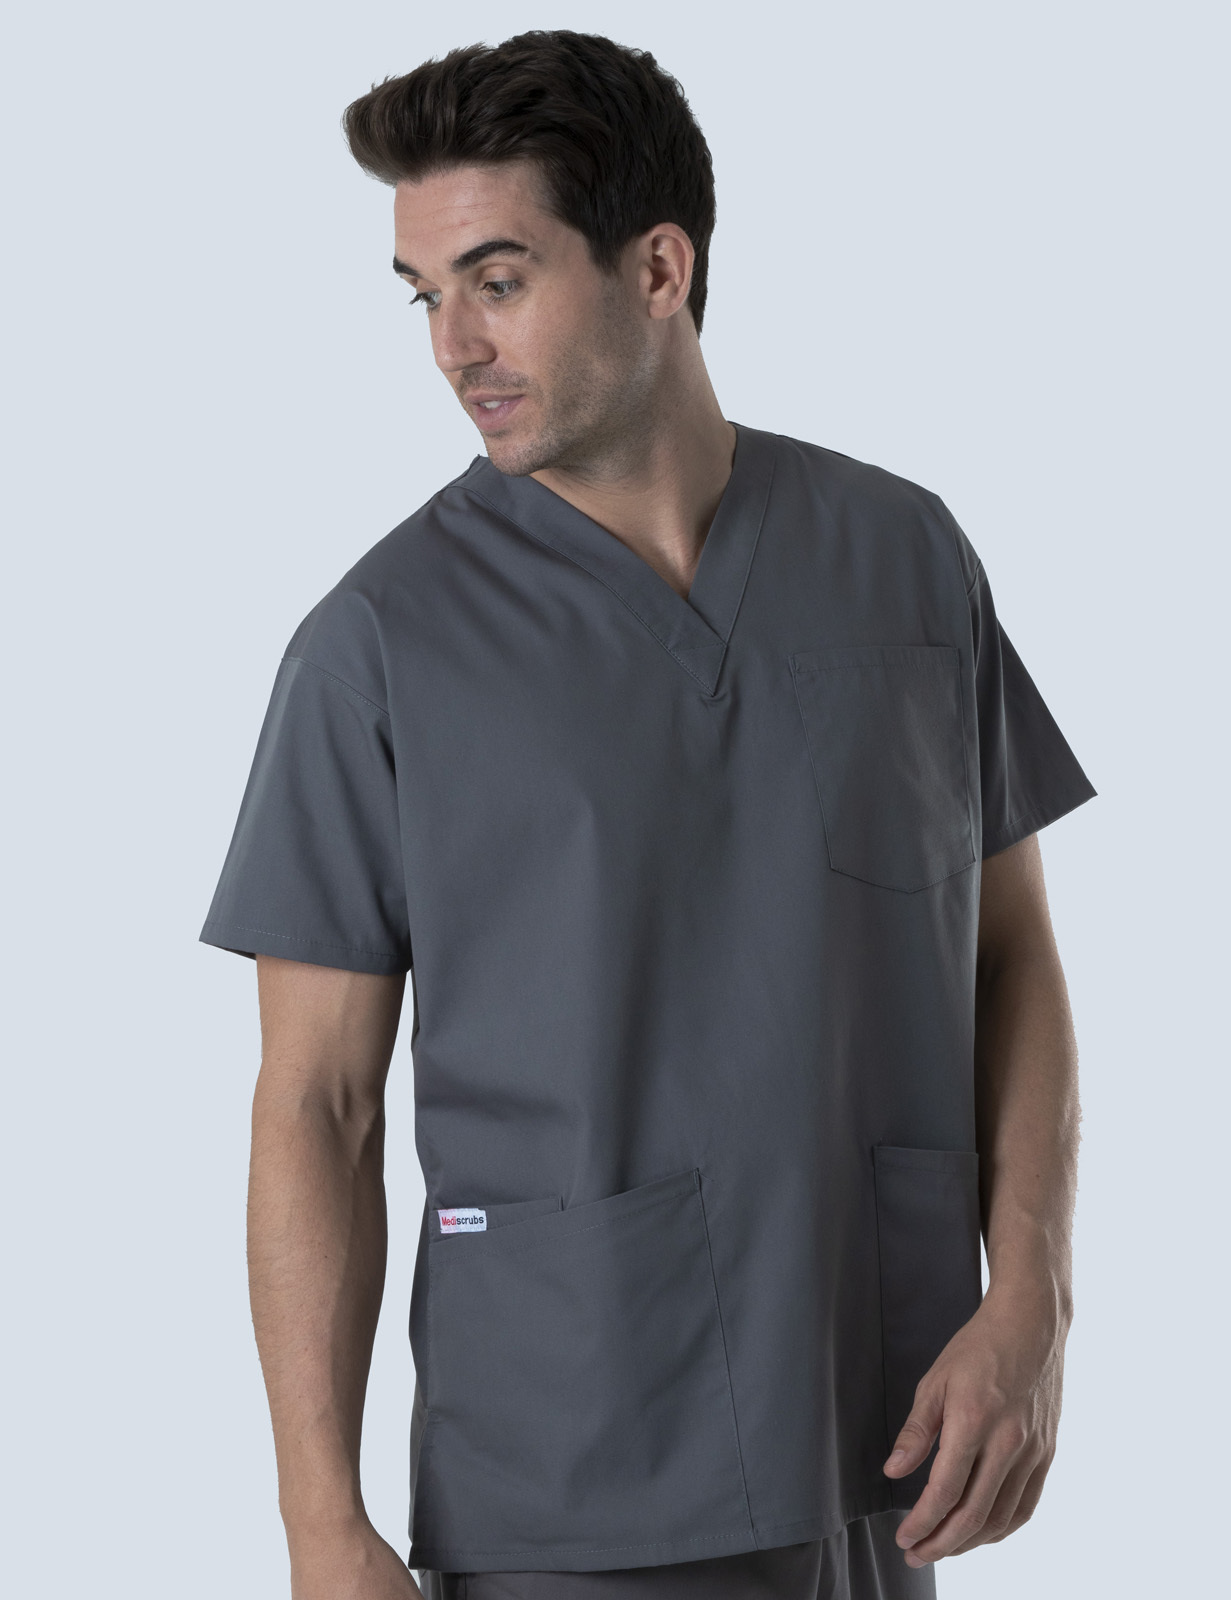 Gympie Hospital - RN Emergency (4 Pocket Scrub Top and Cargo Pants in Steel Grey incl Logos)